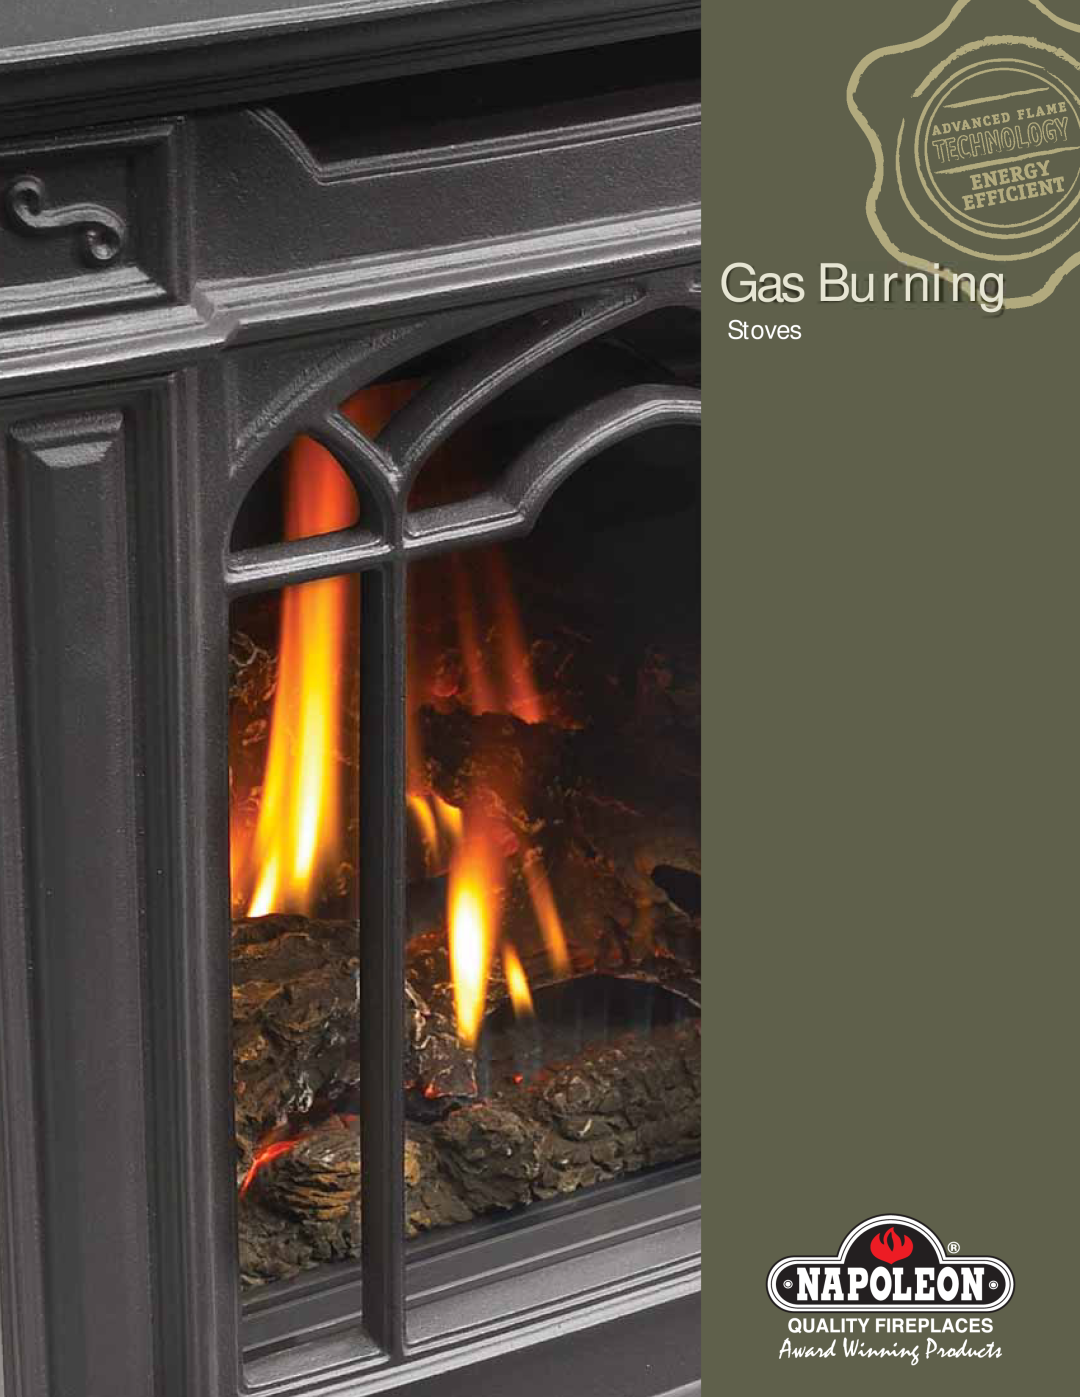 Napoleon Fireplaces Gas Burning Stoves manual 